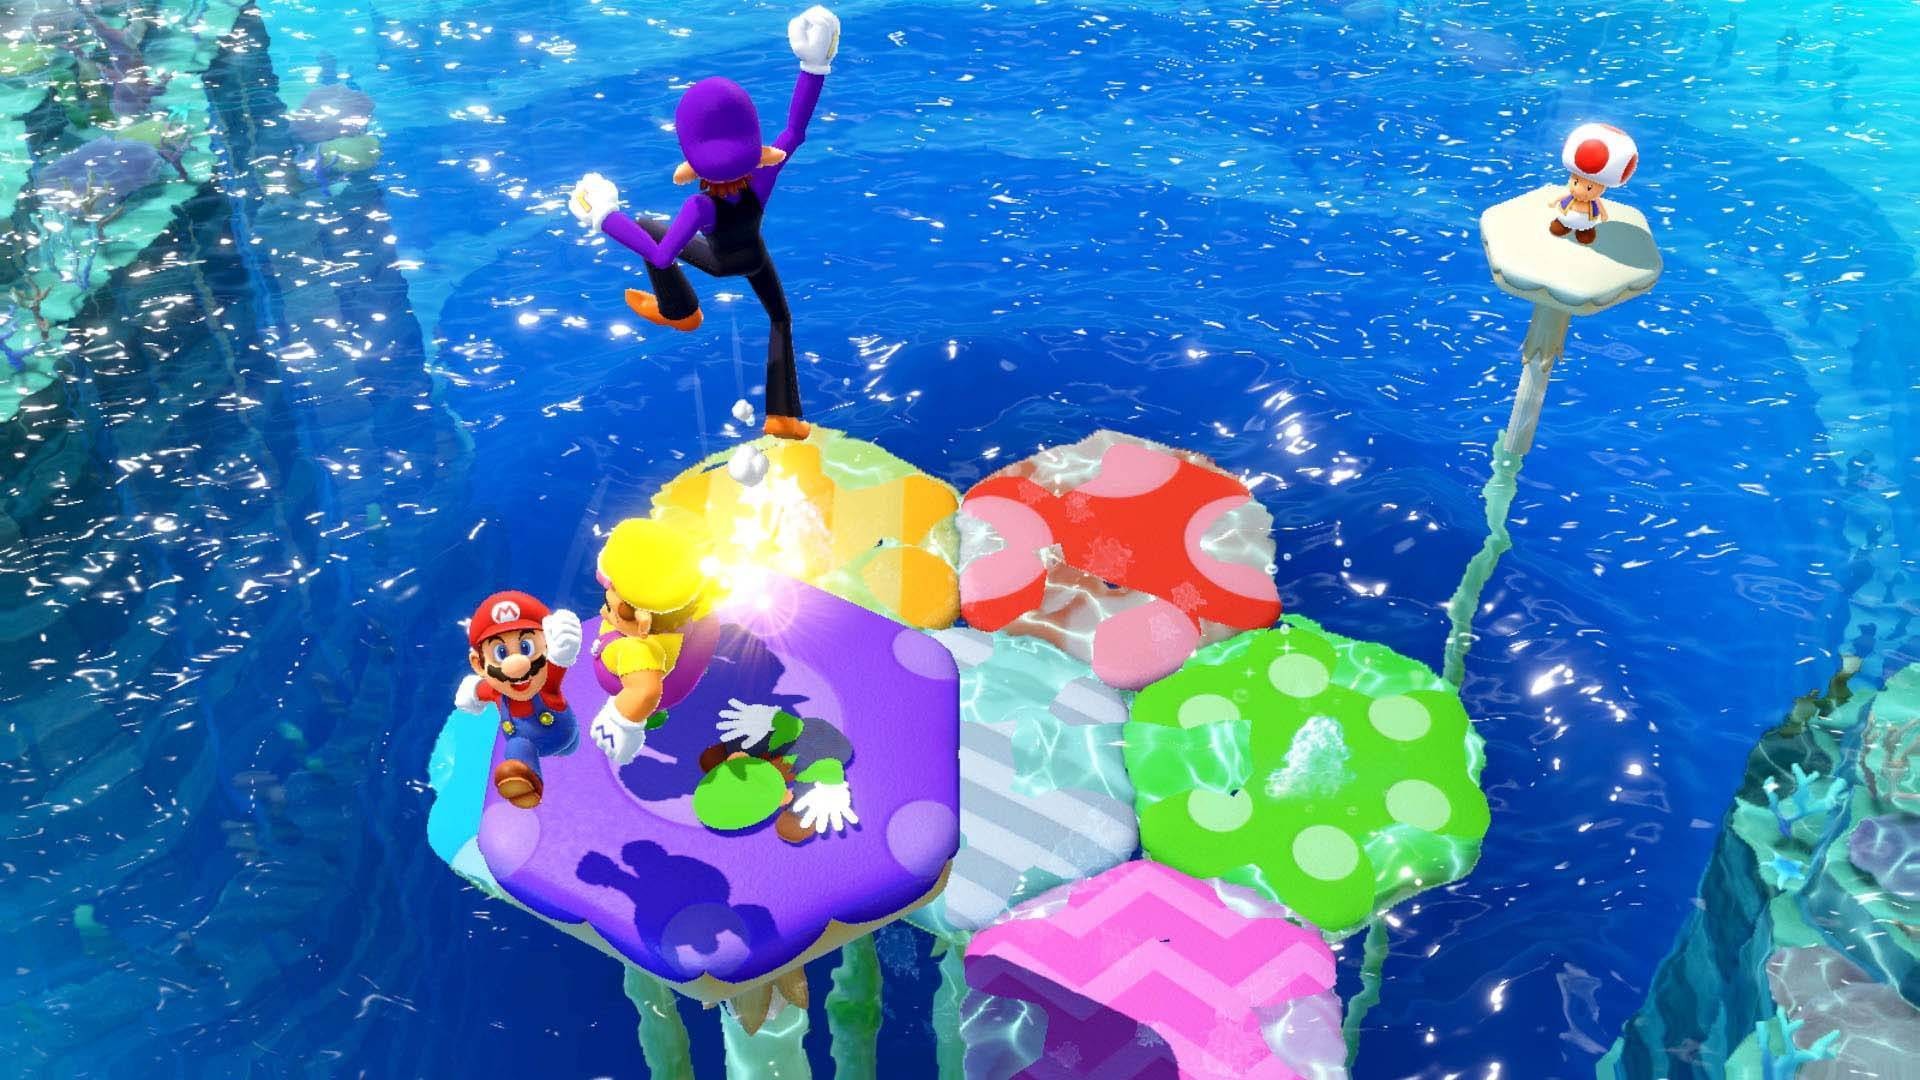  Nintendo Super Mario Party (Nintendo Switch) (European